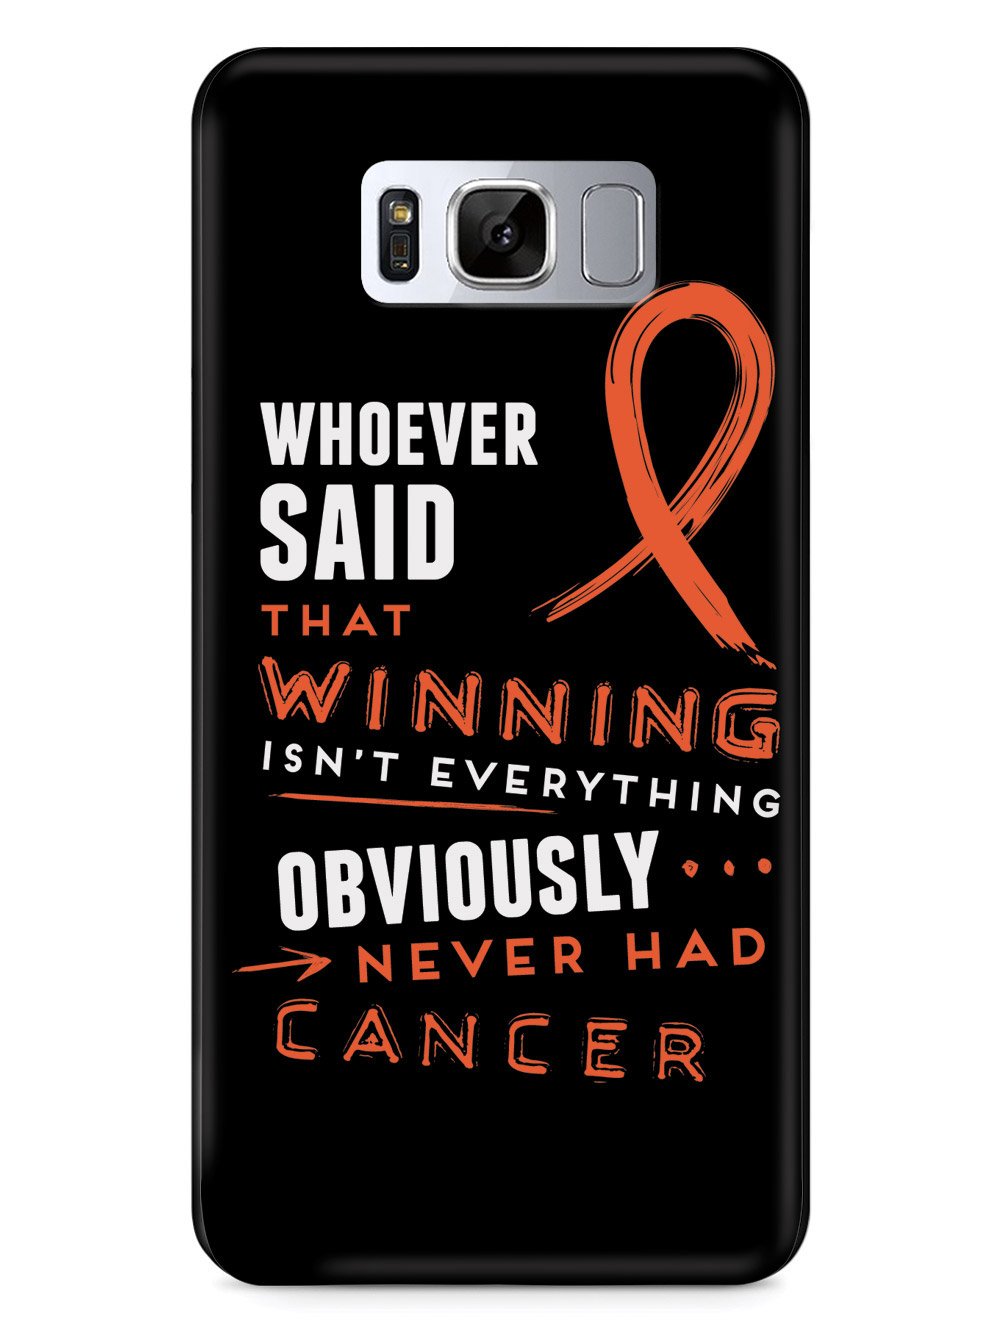 Winning is Everything - Cancer Awareness Orange Case